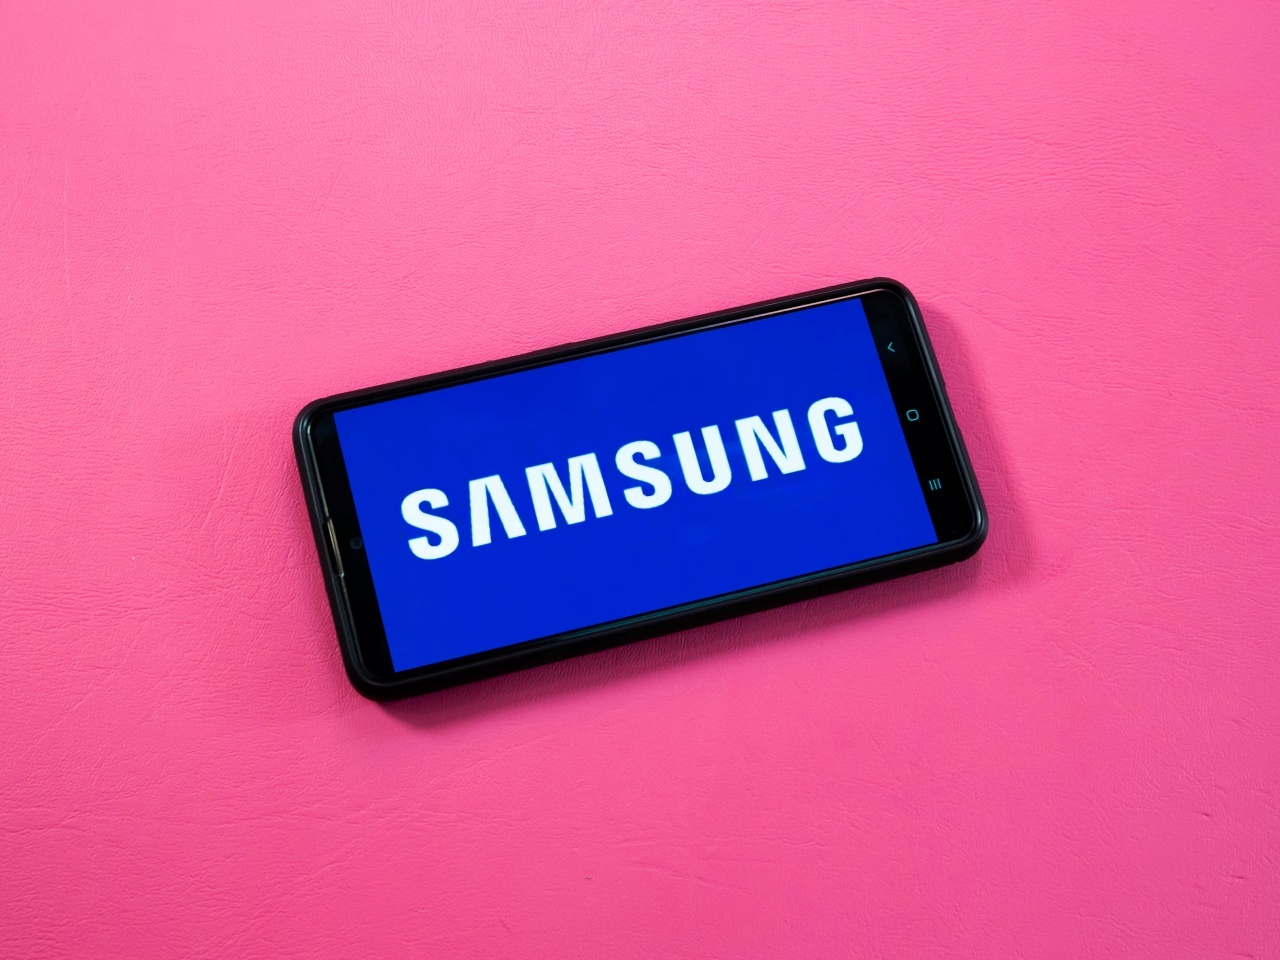 Samsungのロゴを表示したスマホ